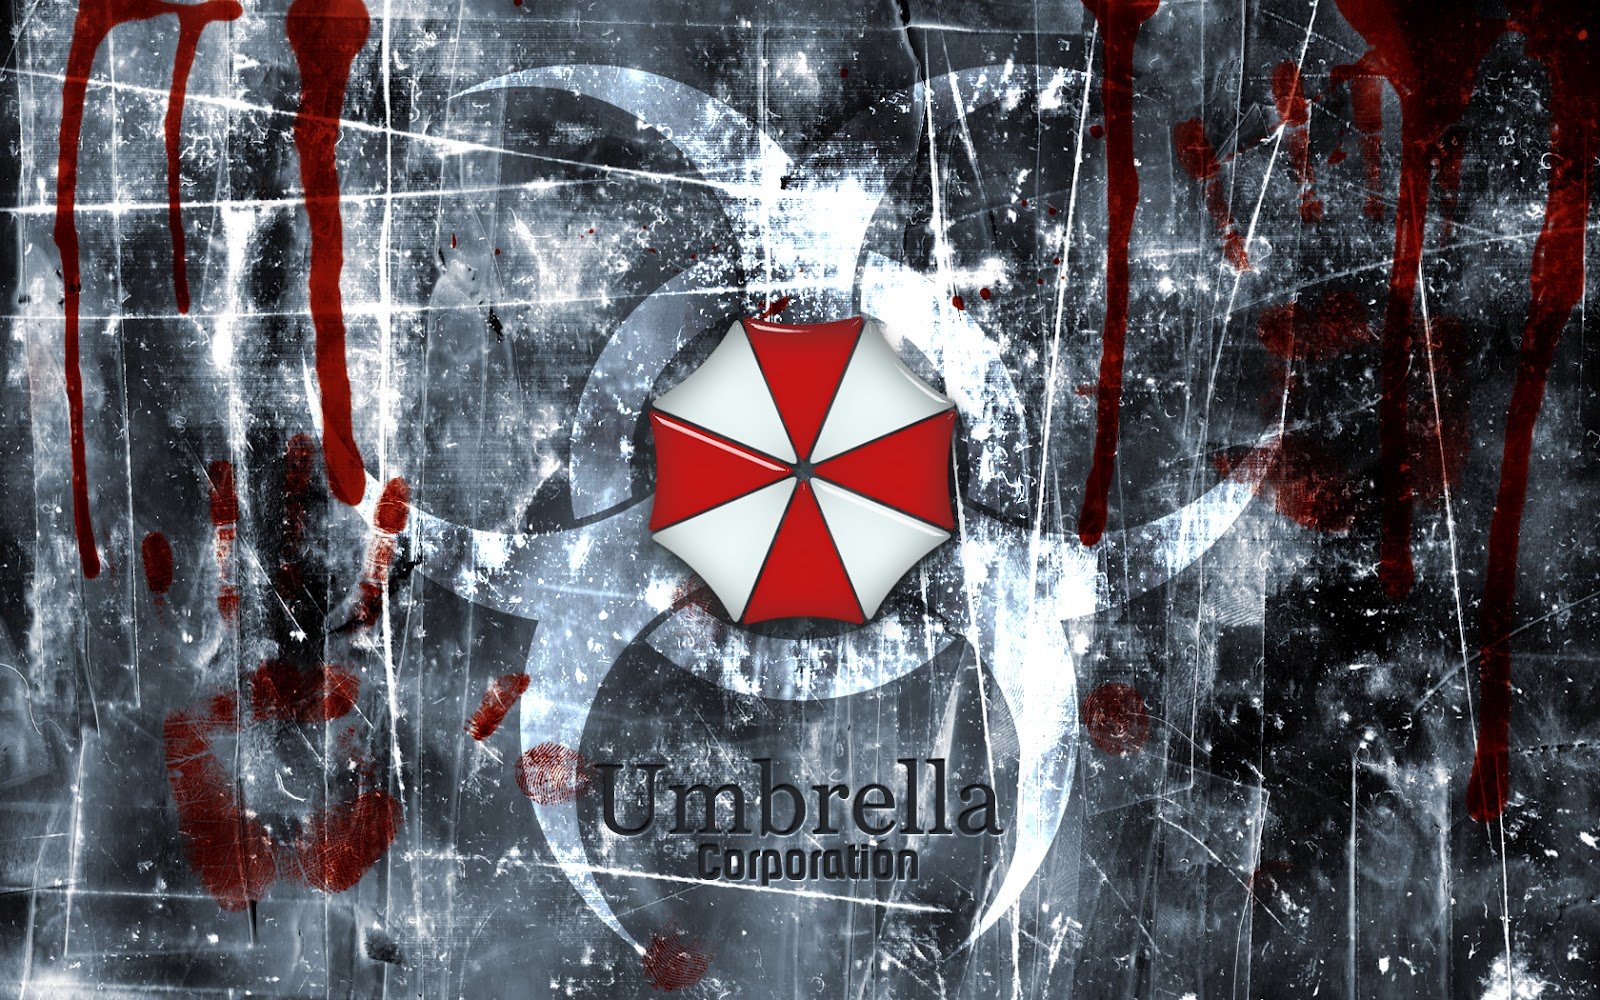  umbrella corporation title logo symbol wallpaper umbrella corporation